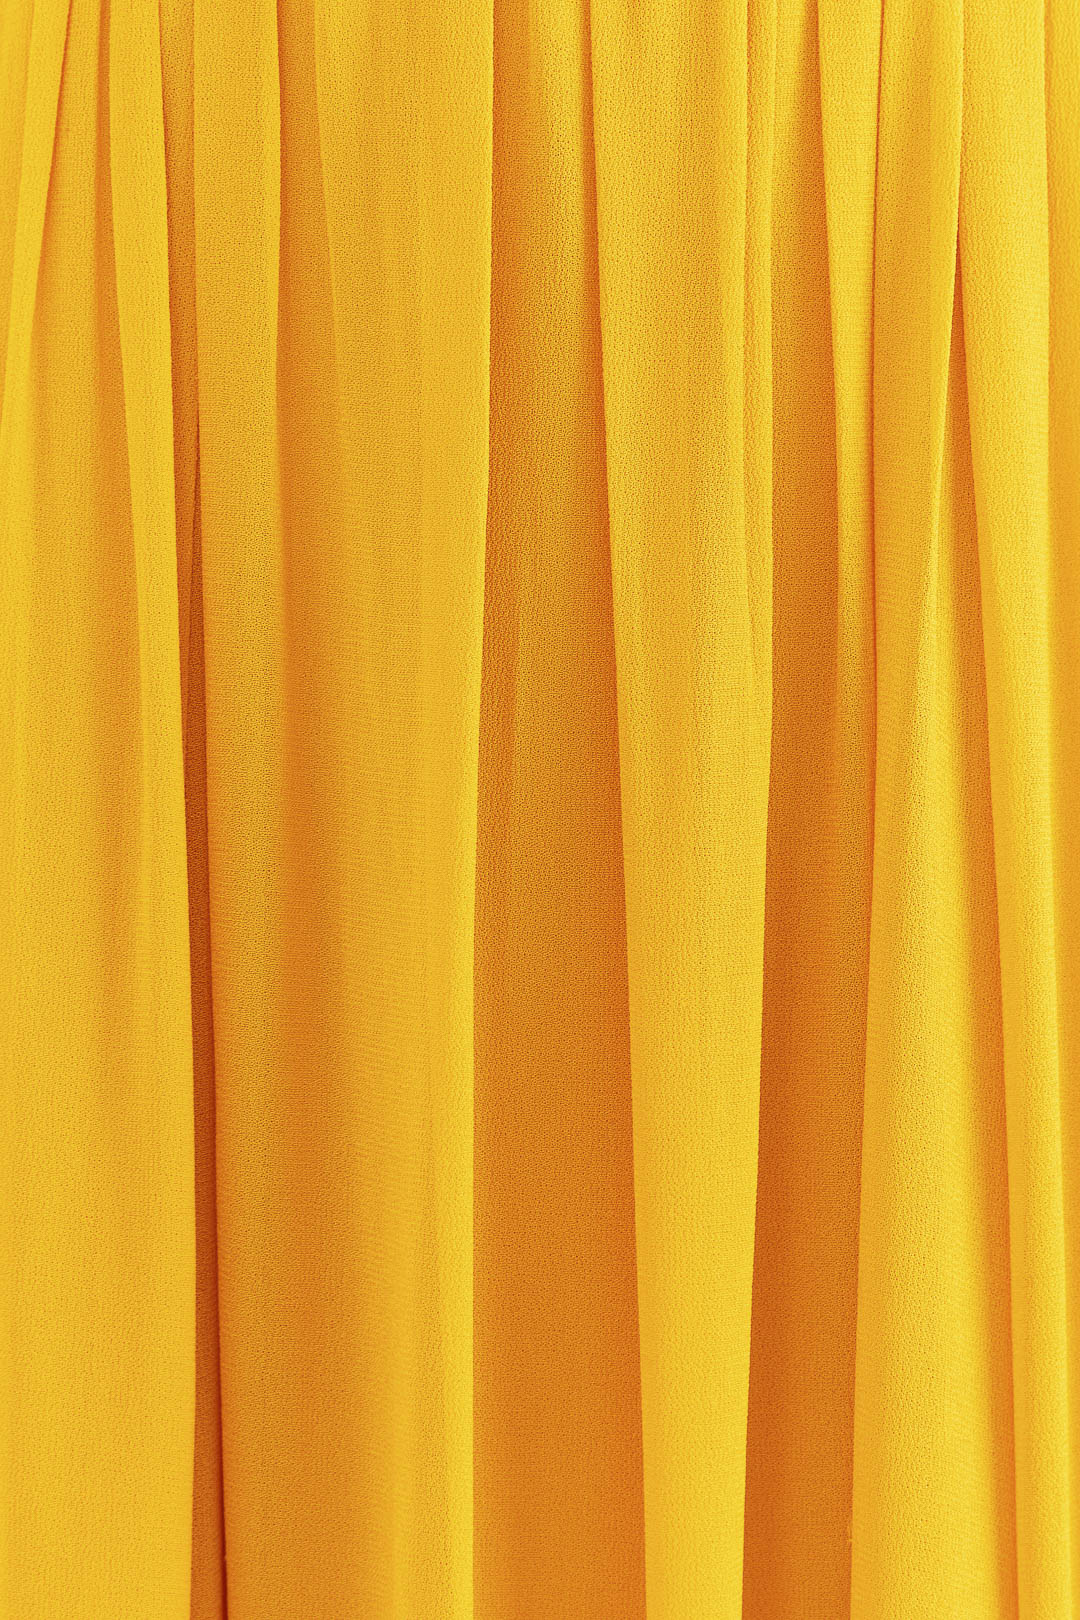 Yellow Sleeveless Maxi Dress With Sun Buckle